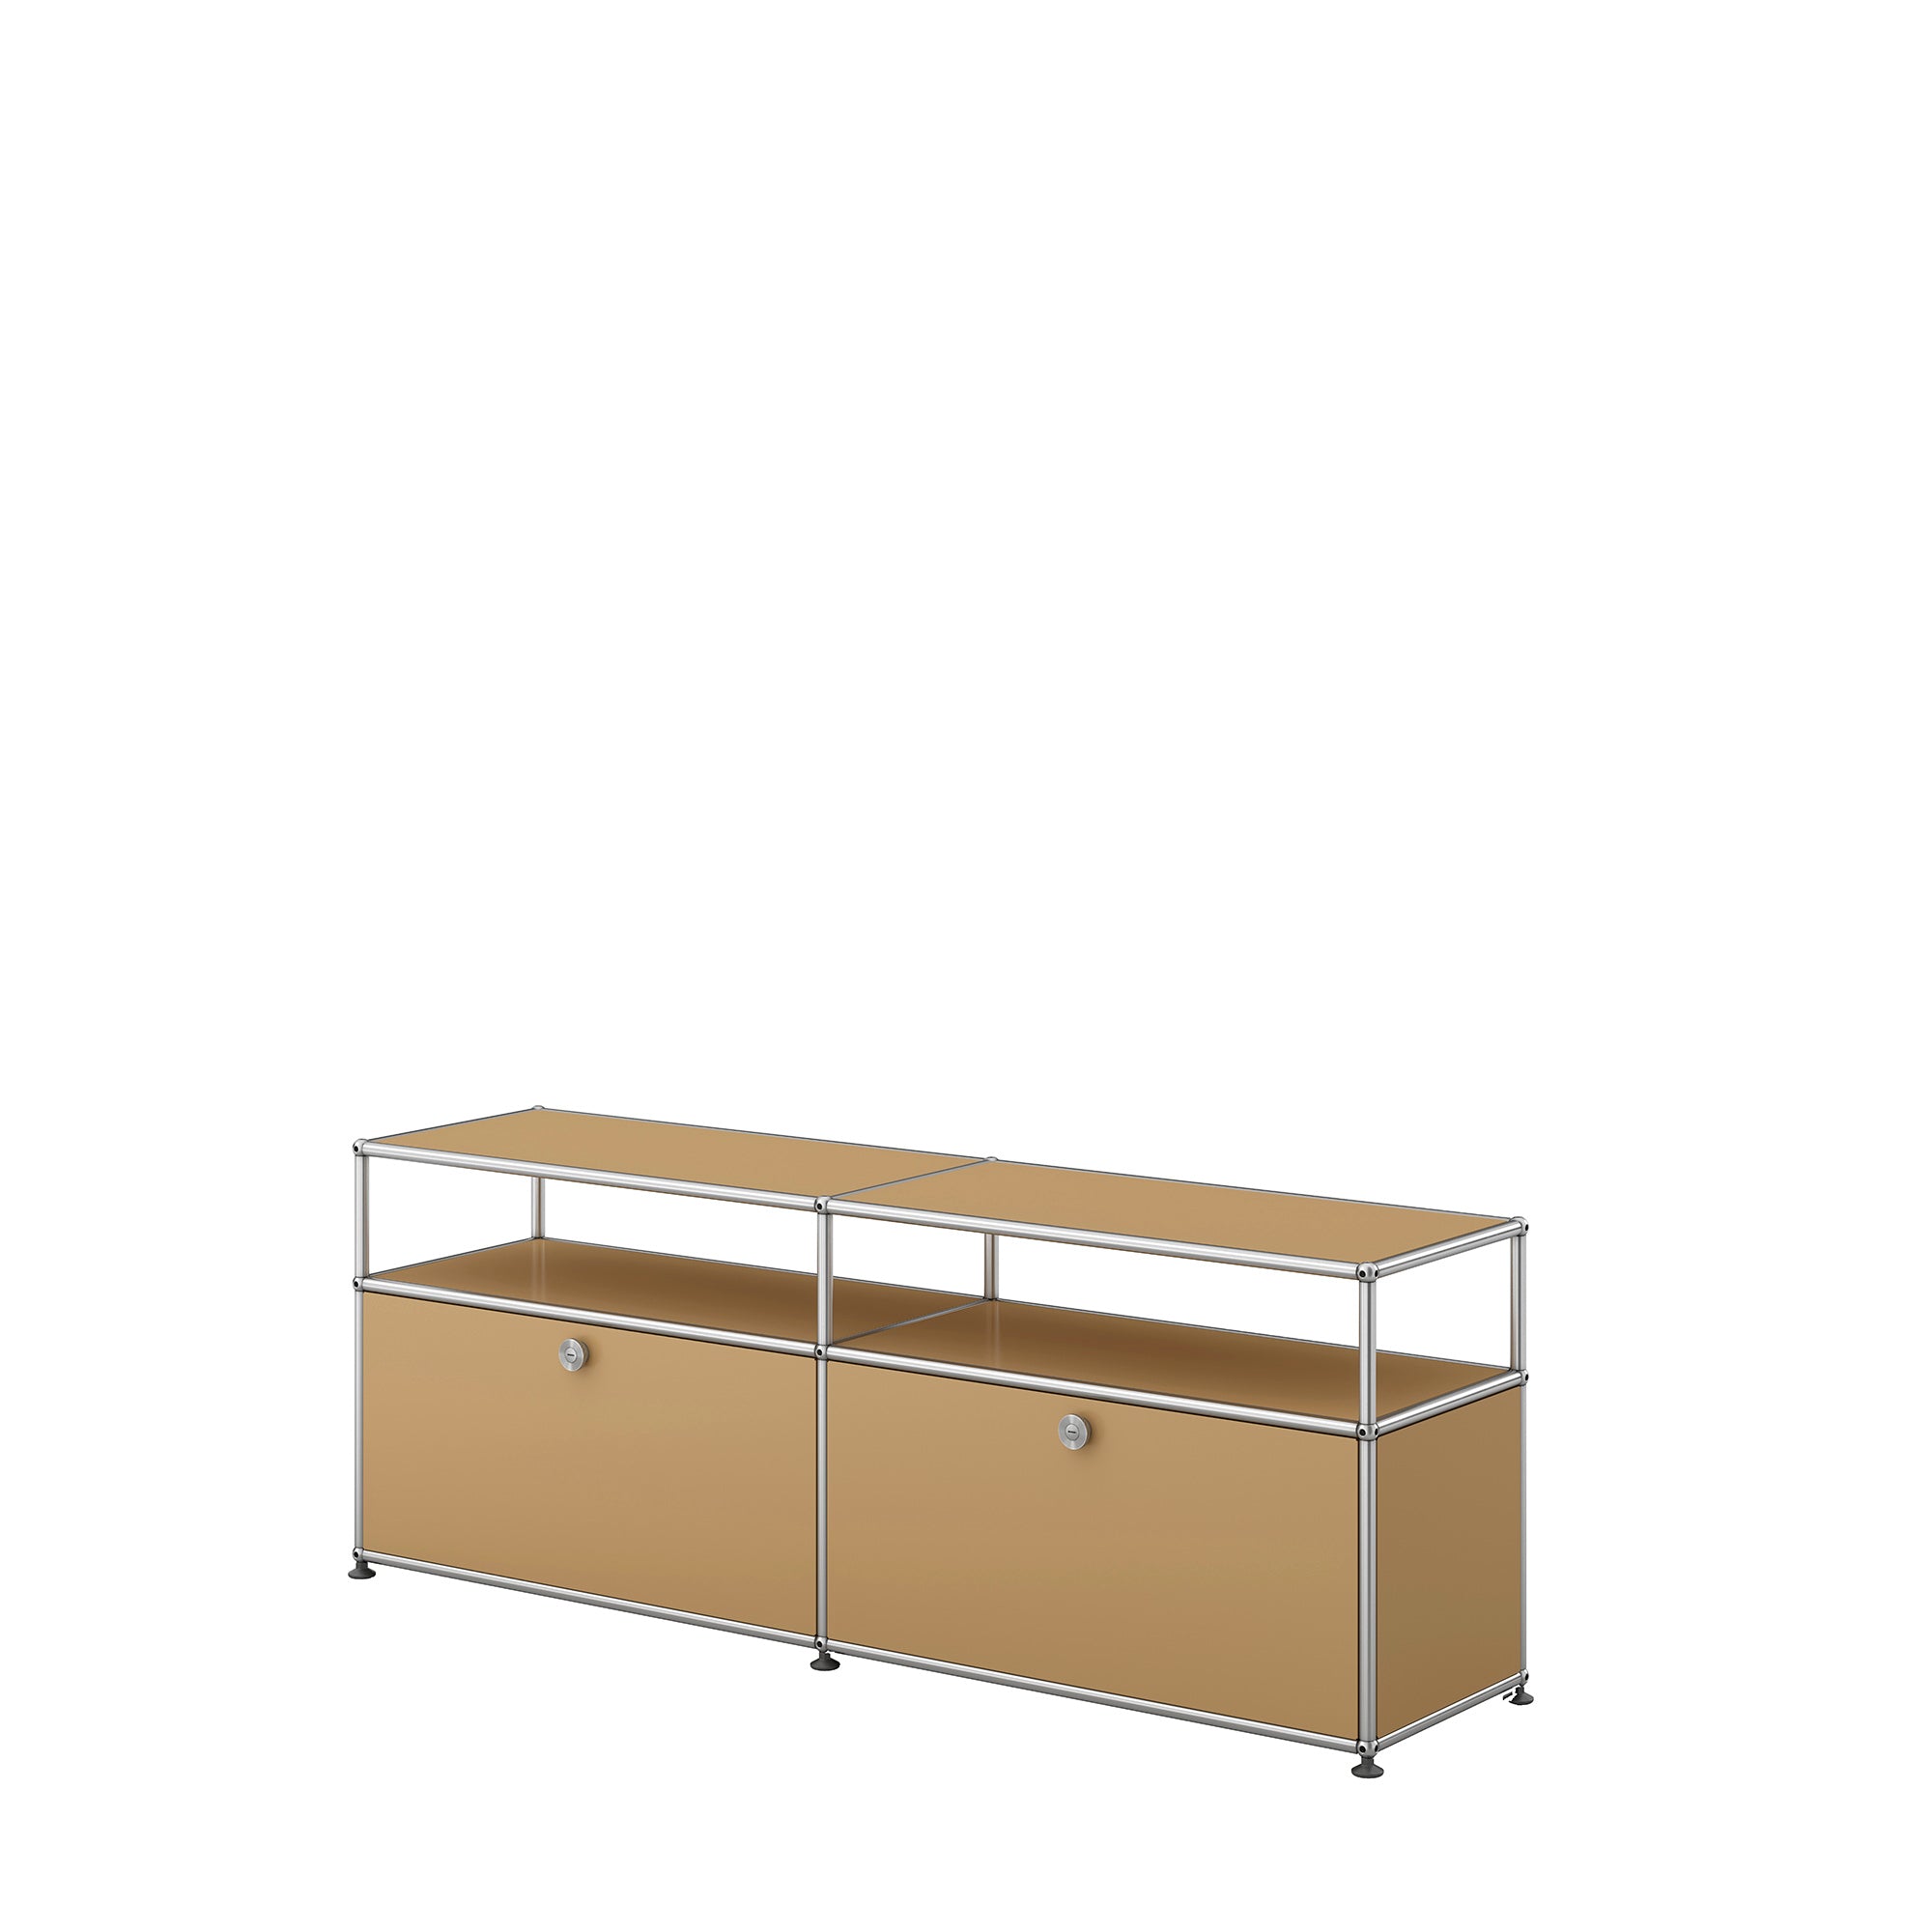 Haller cabinet modular config. 6